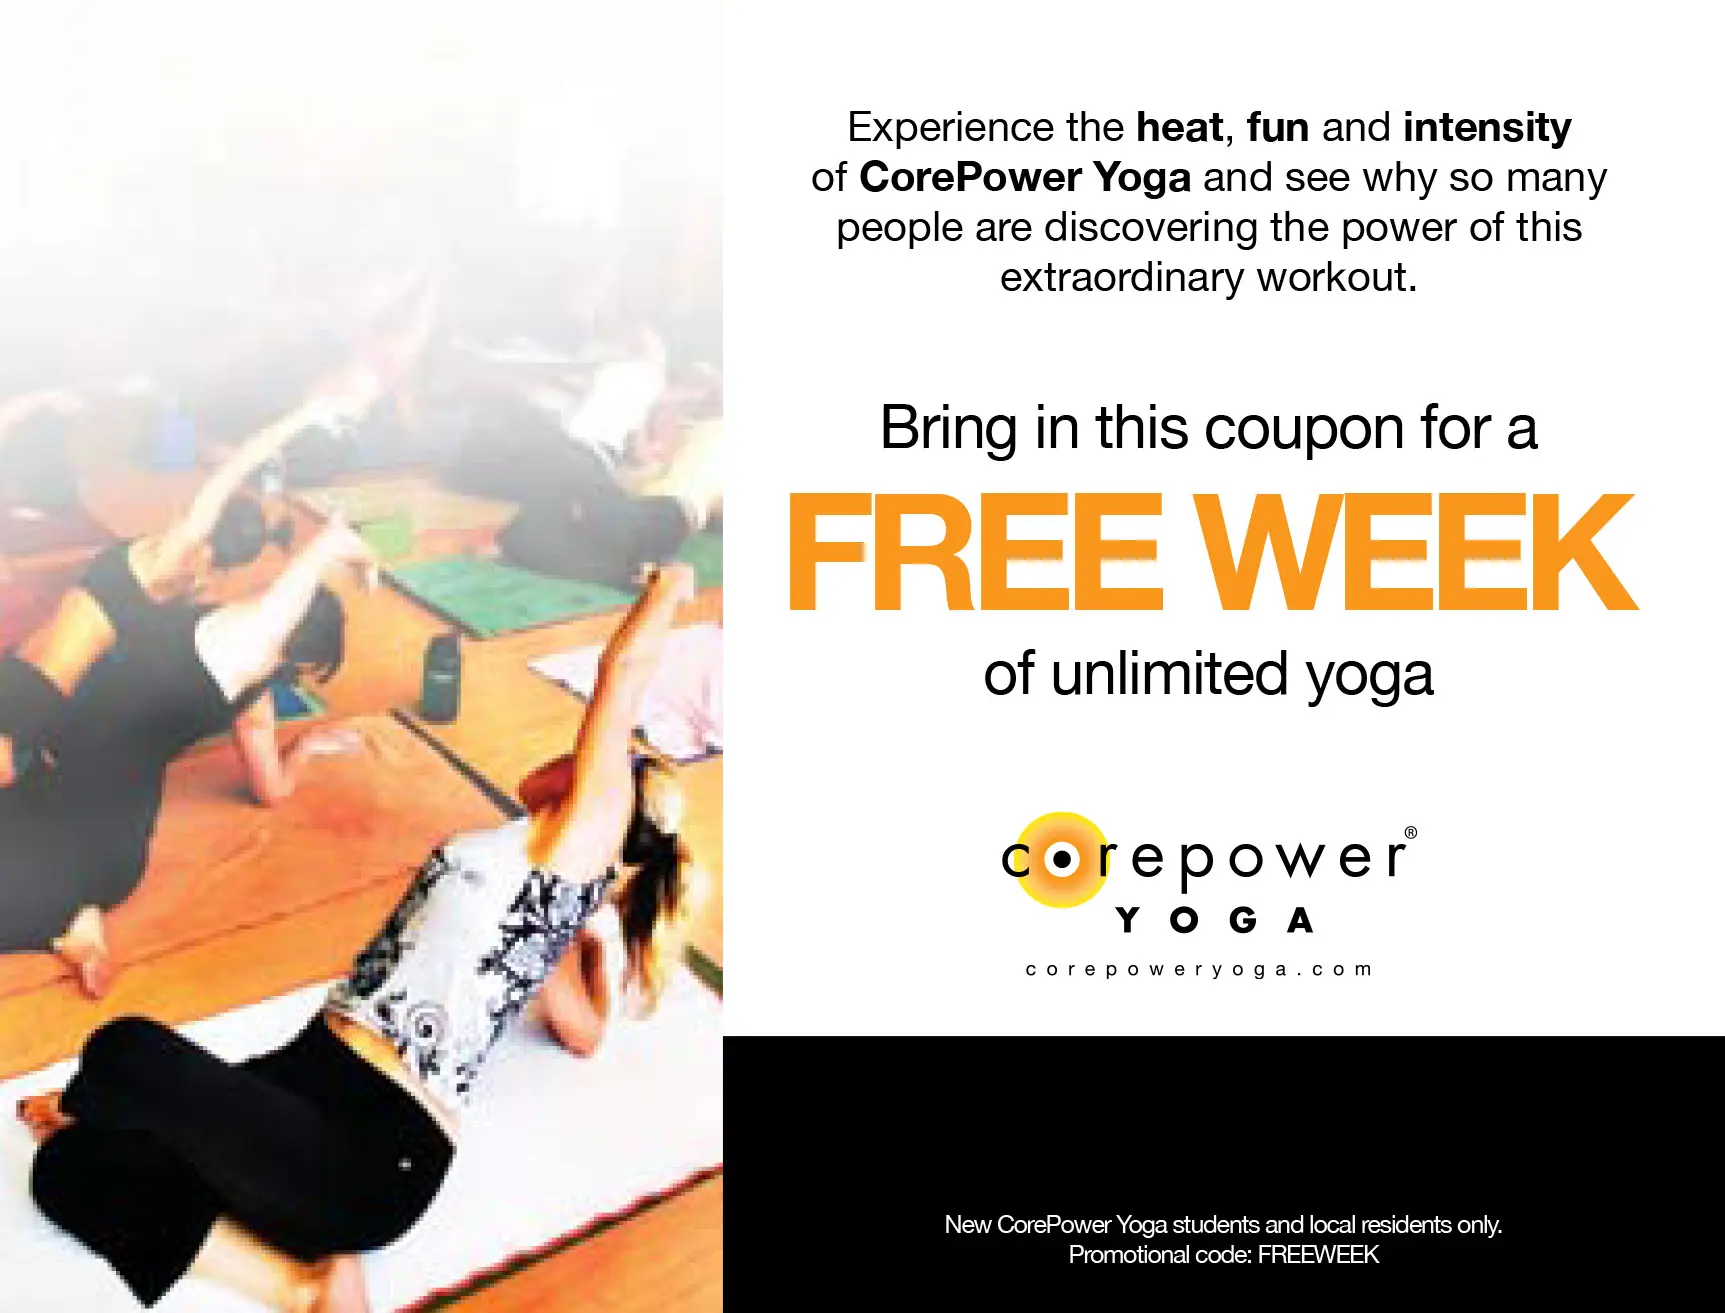 corepower yoga free week - How many calories does CorePower Yoga burn